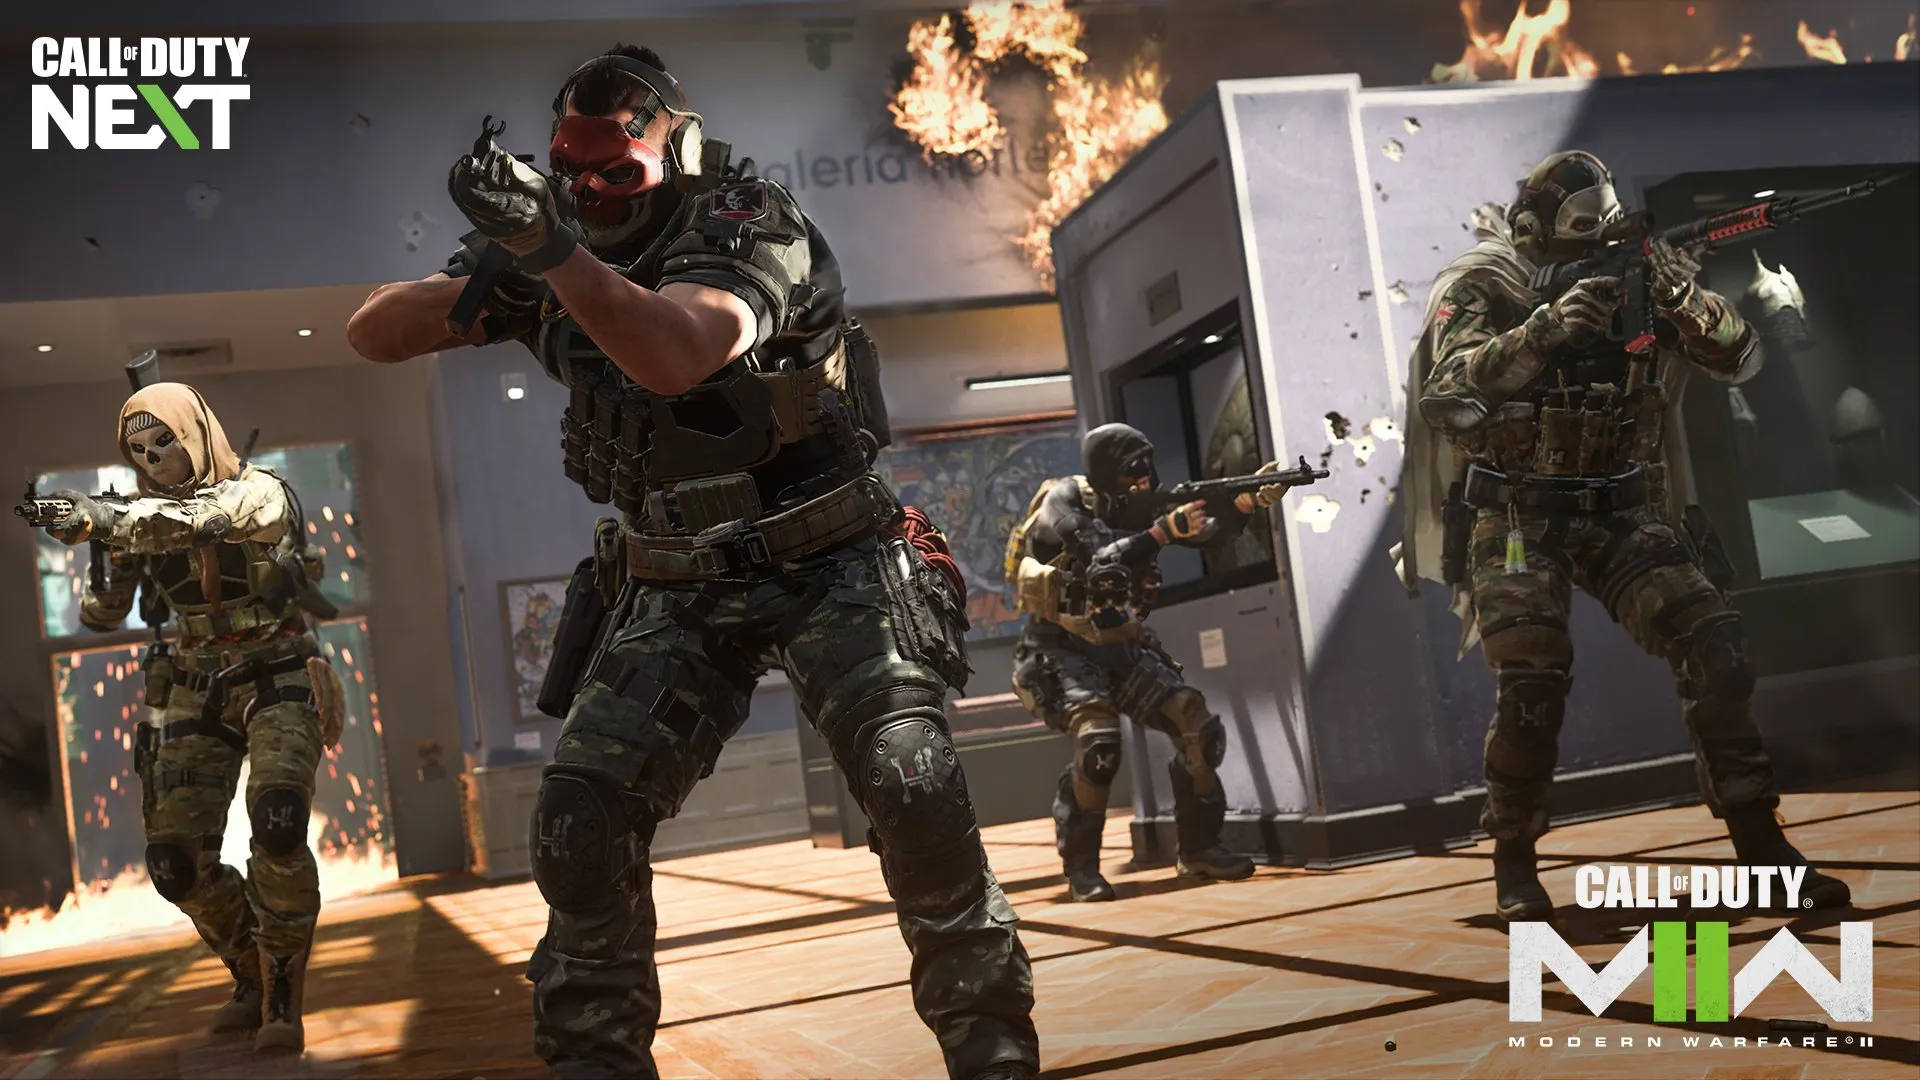 Call of Duty: Modern Warfare II ranked play